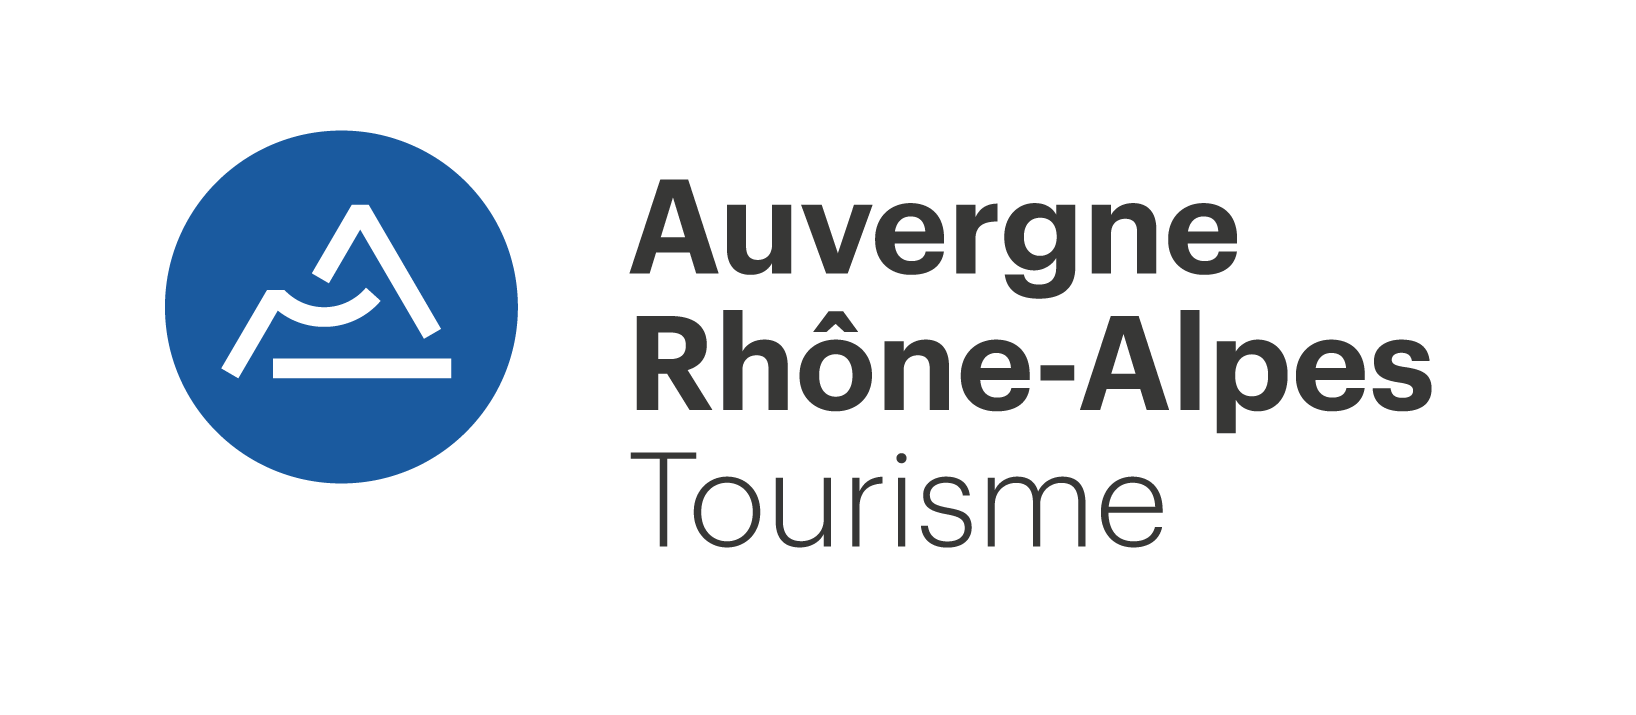 logo-auvergne-rhone-alpes-tourisme-blanc-cmjn.png